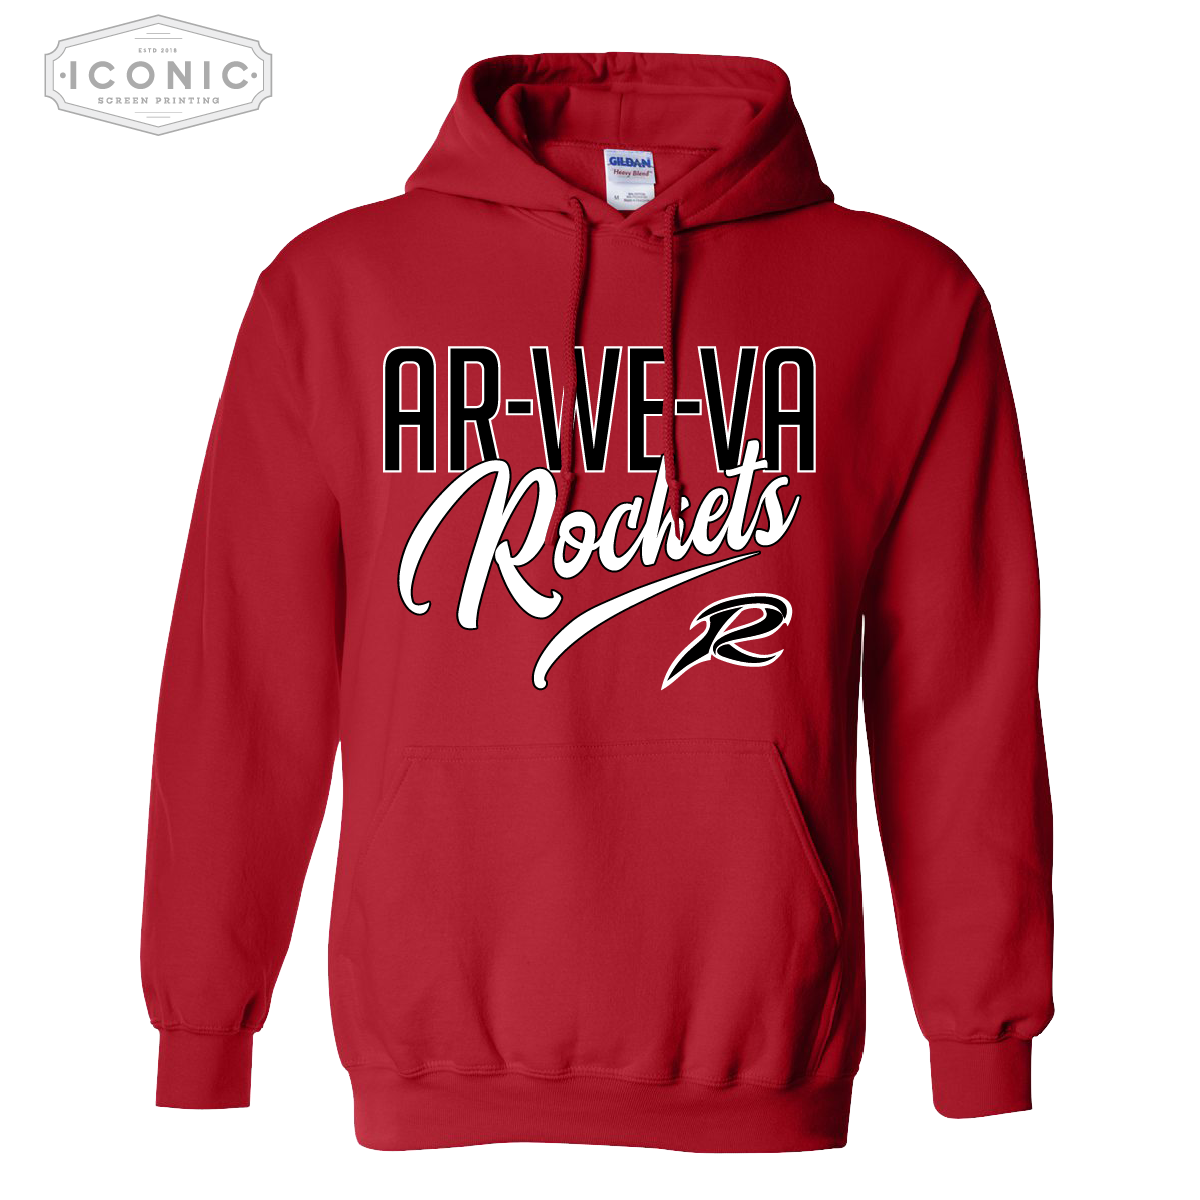 AWV Rockets - Heavy Blend Hooded Sweatshirt - Clearance ONE LEFT!